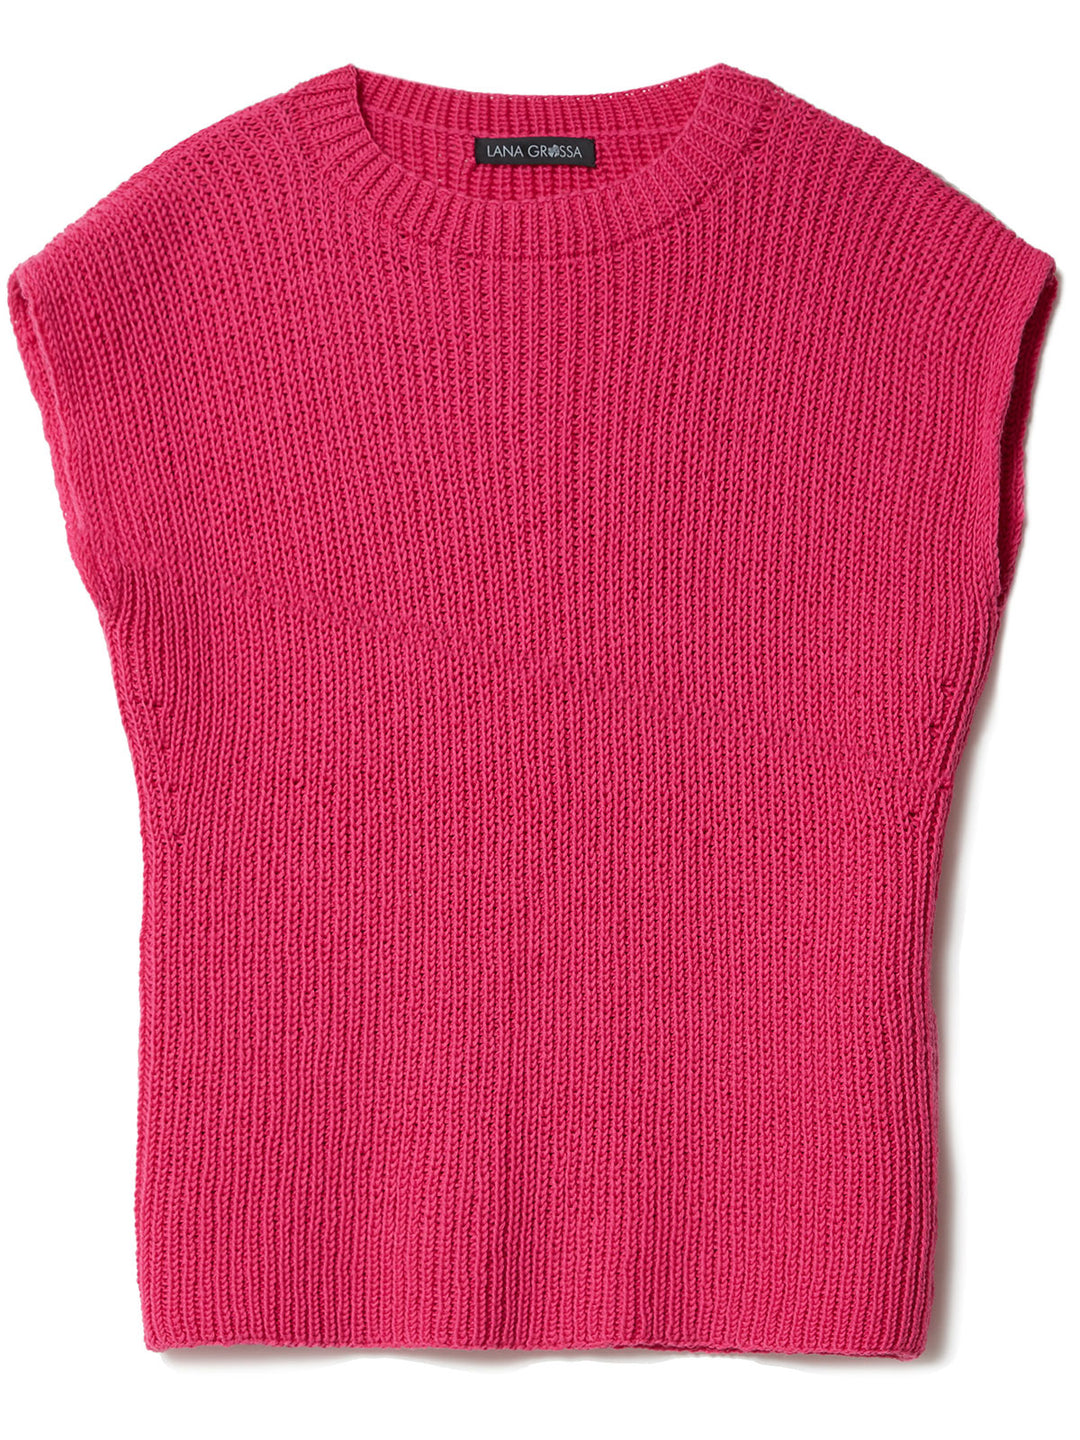 Breipakket Cotton Wool shirt in halve patentsteek